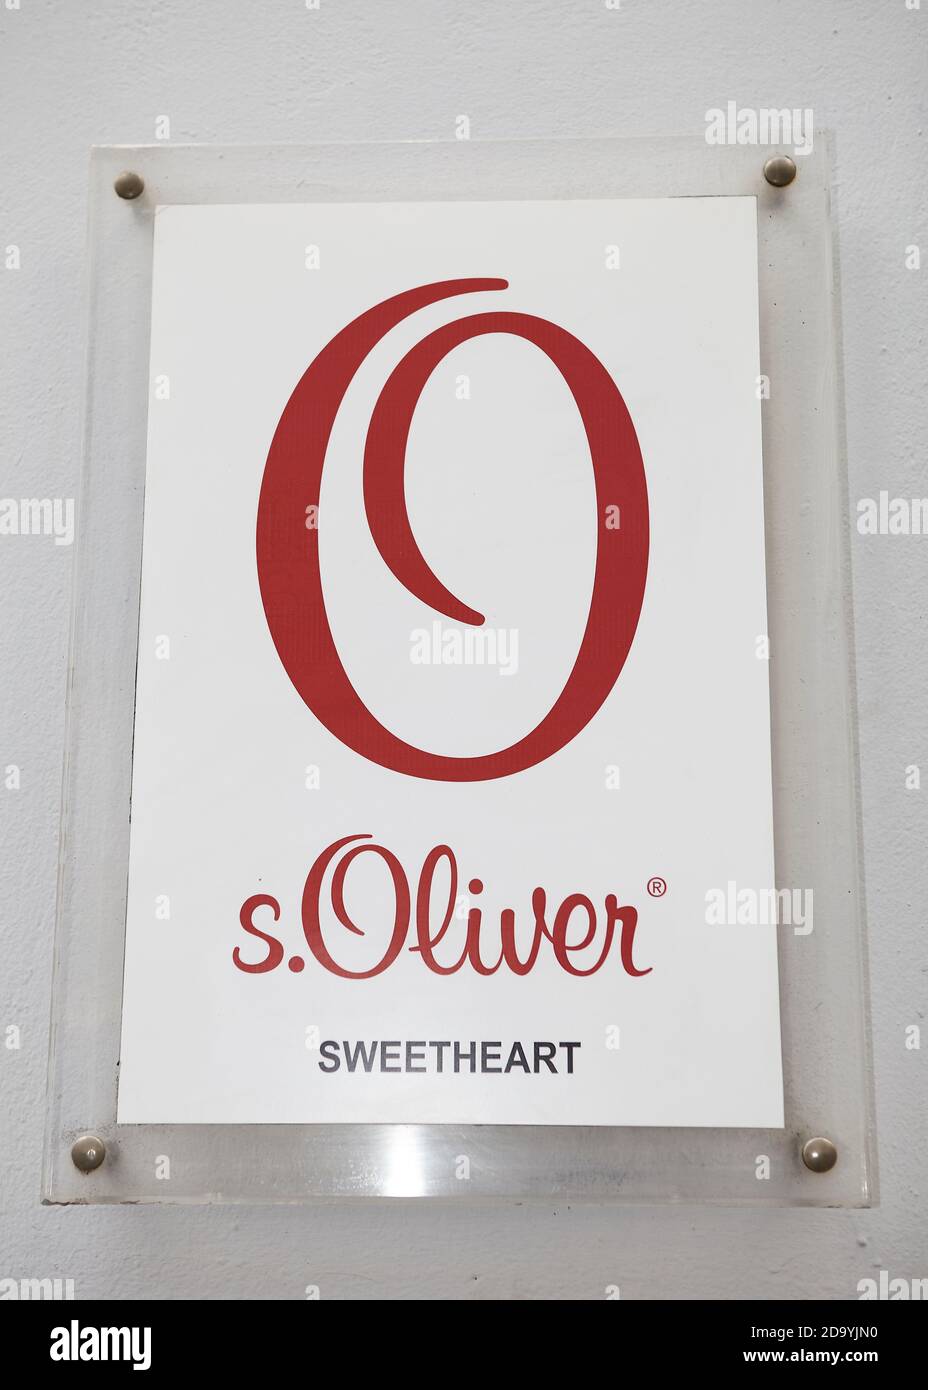 s oliver logo sign Stock Photo